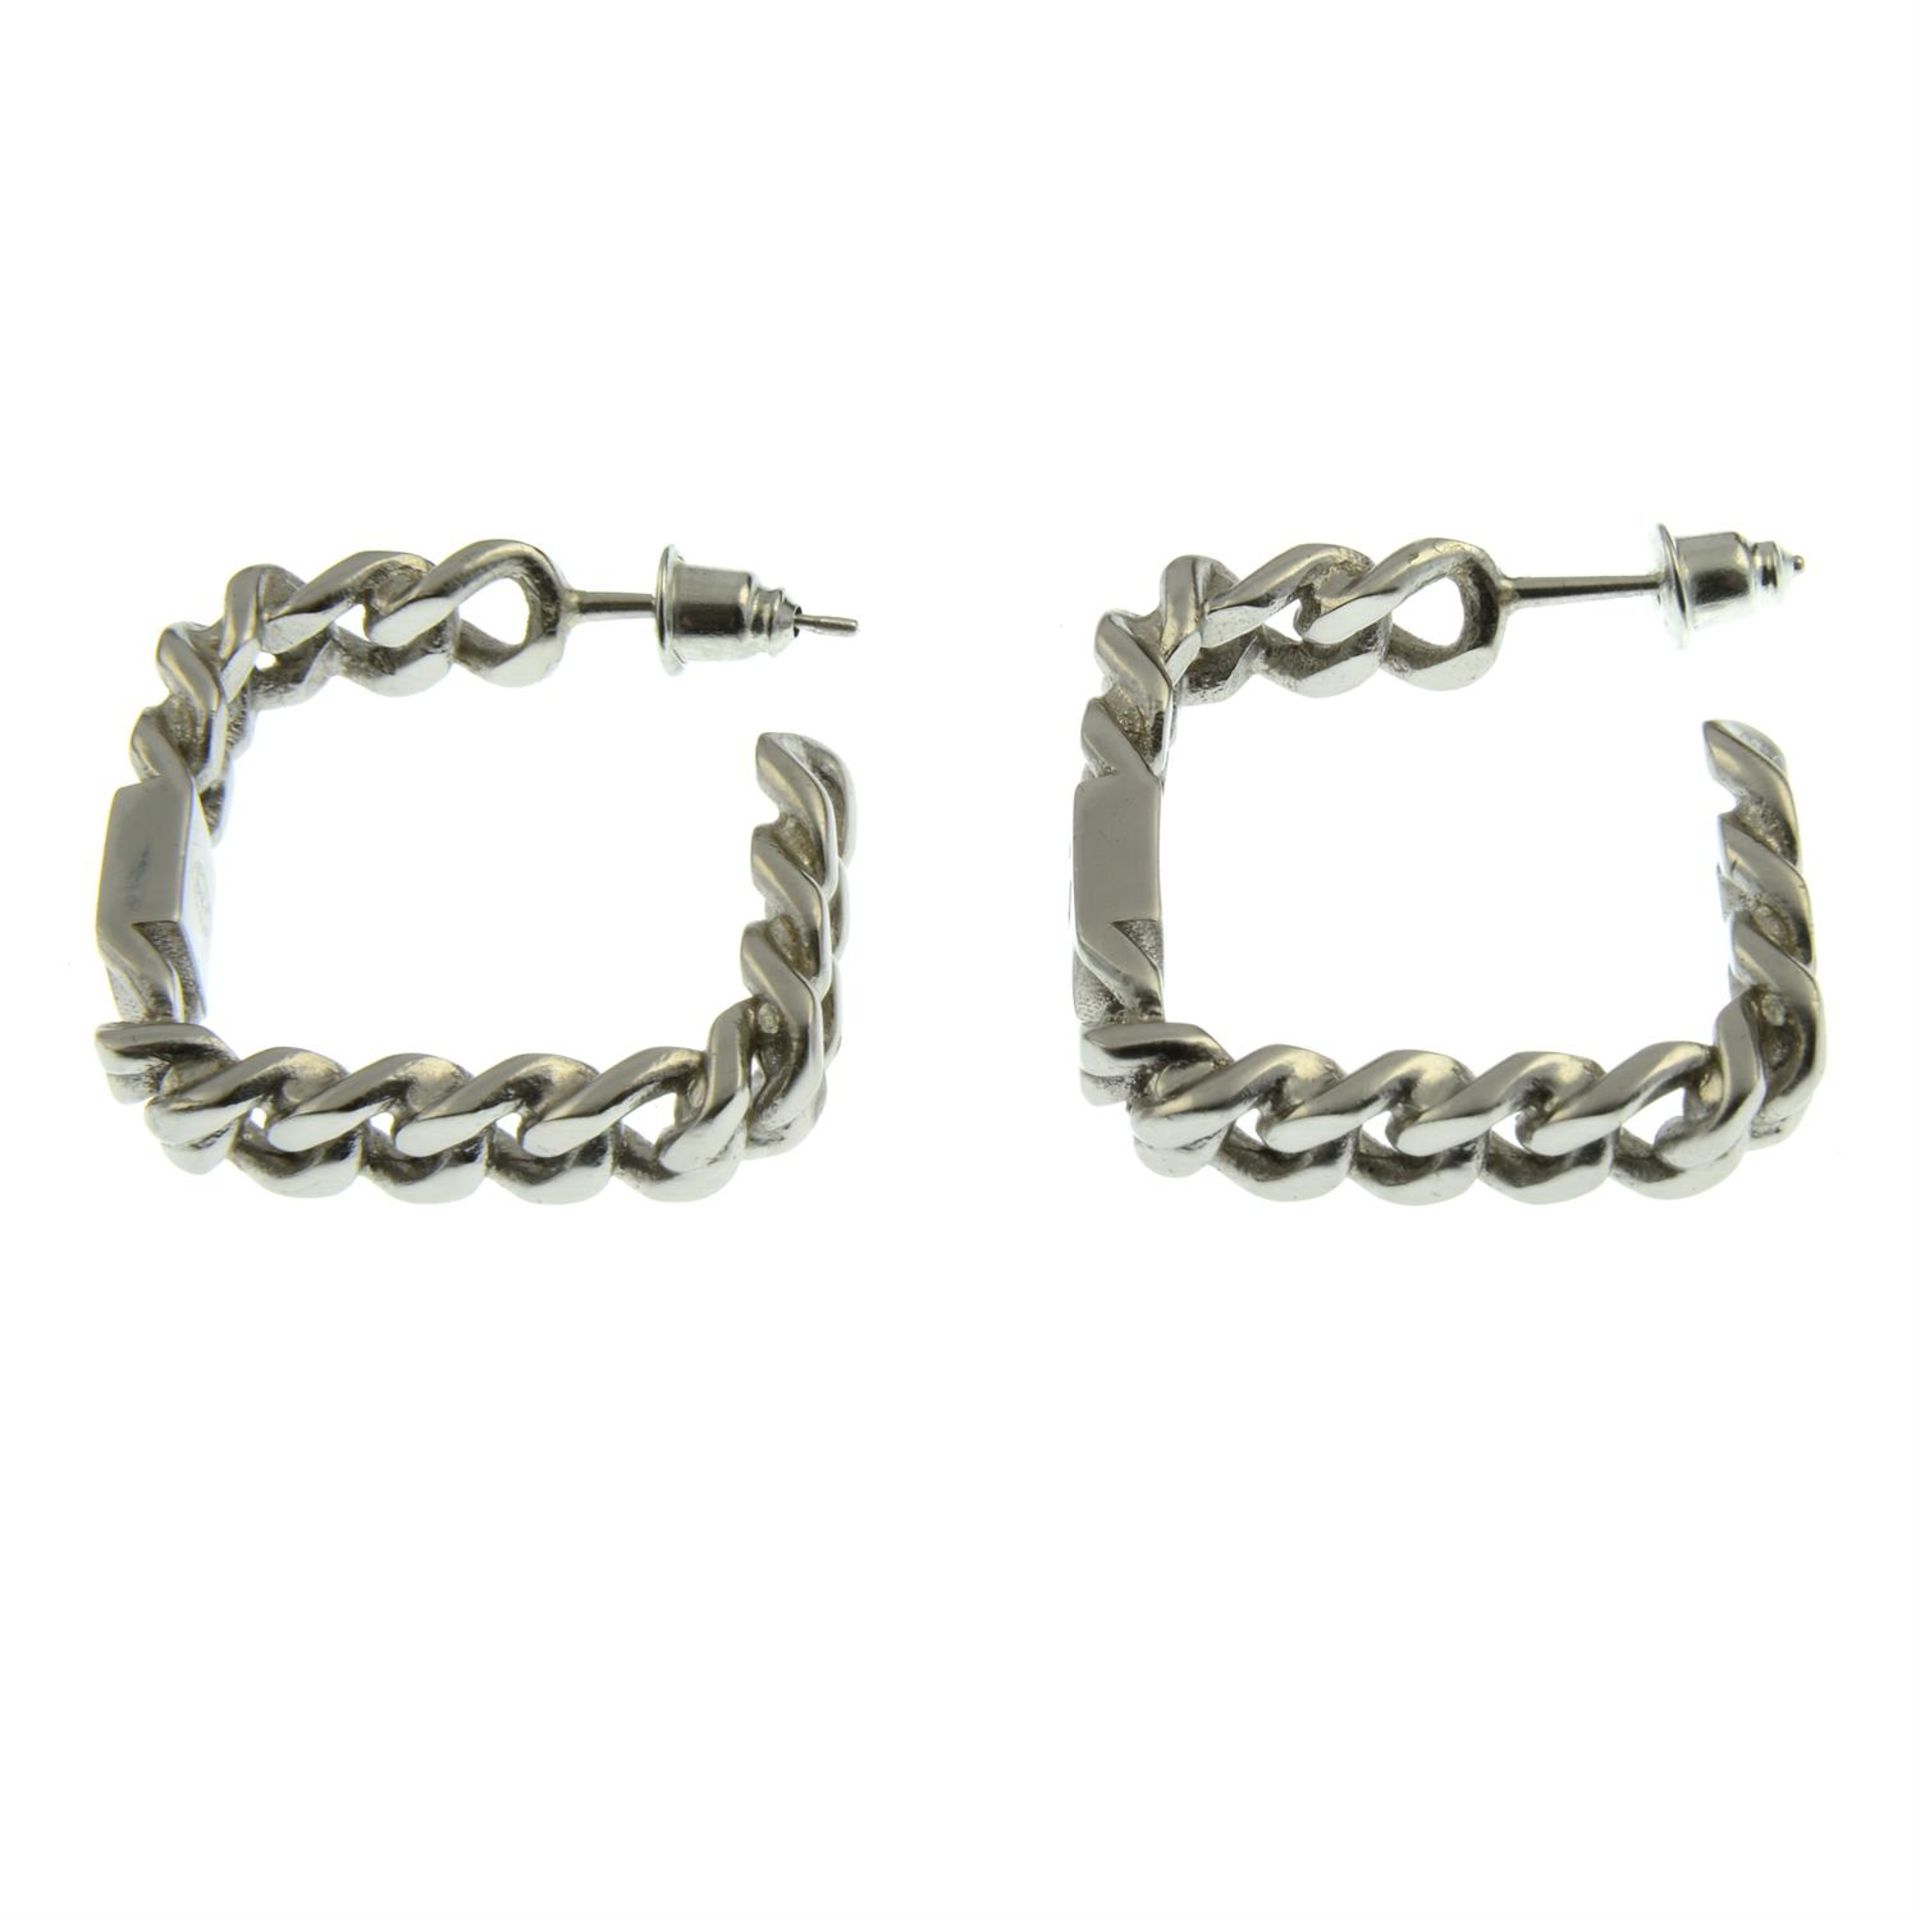 CHANEL - a pair of chain hoop earrings. - Image 2 of 4